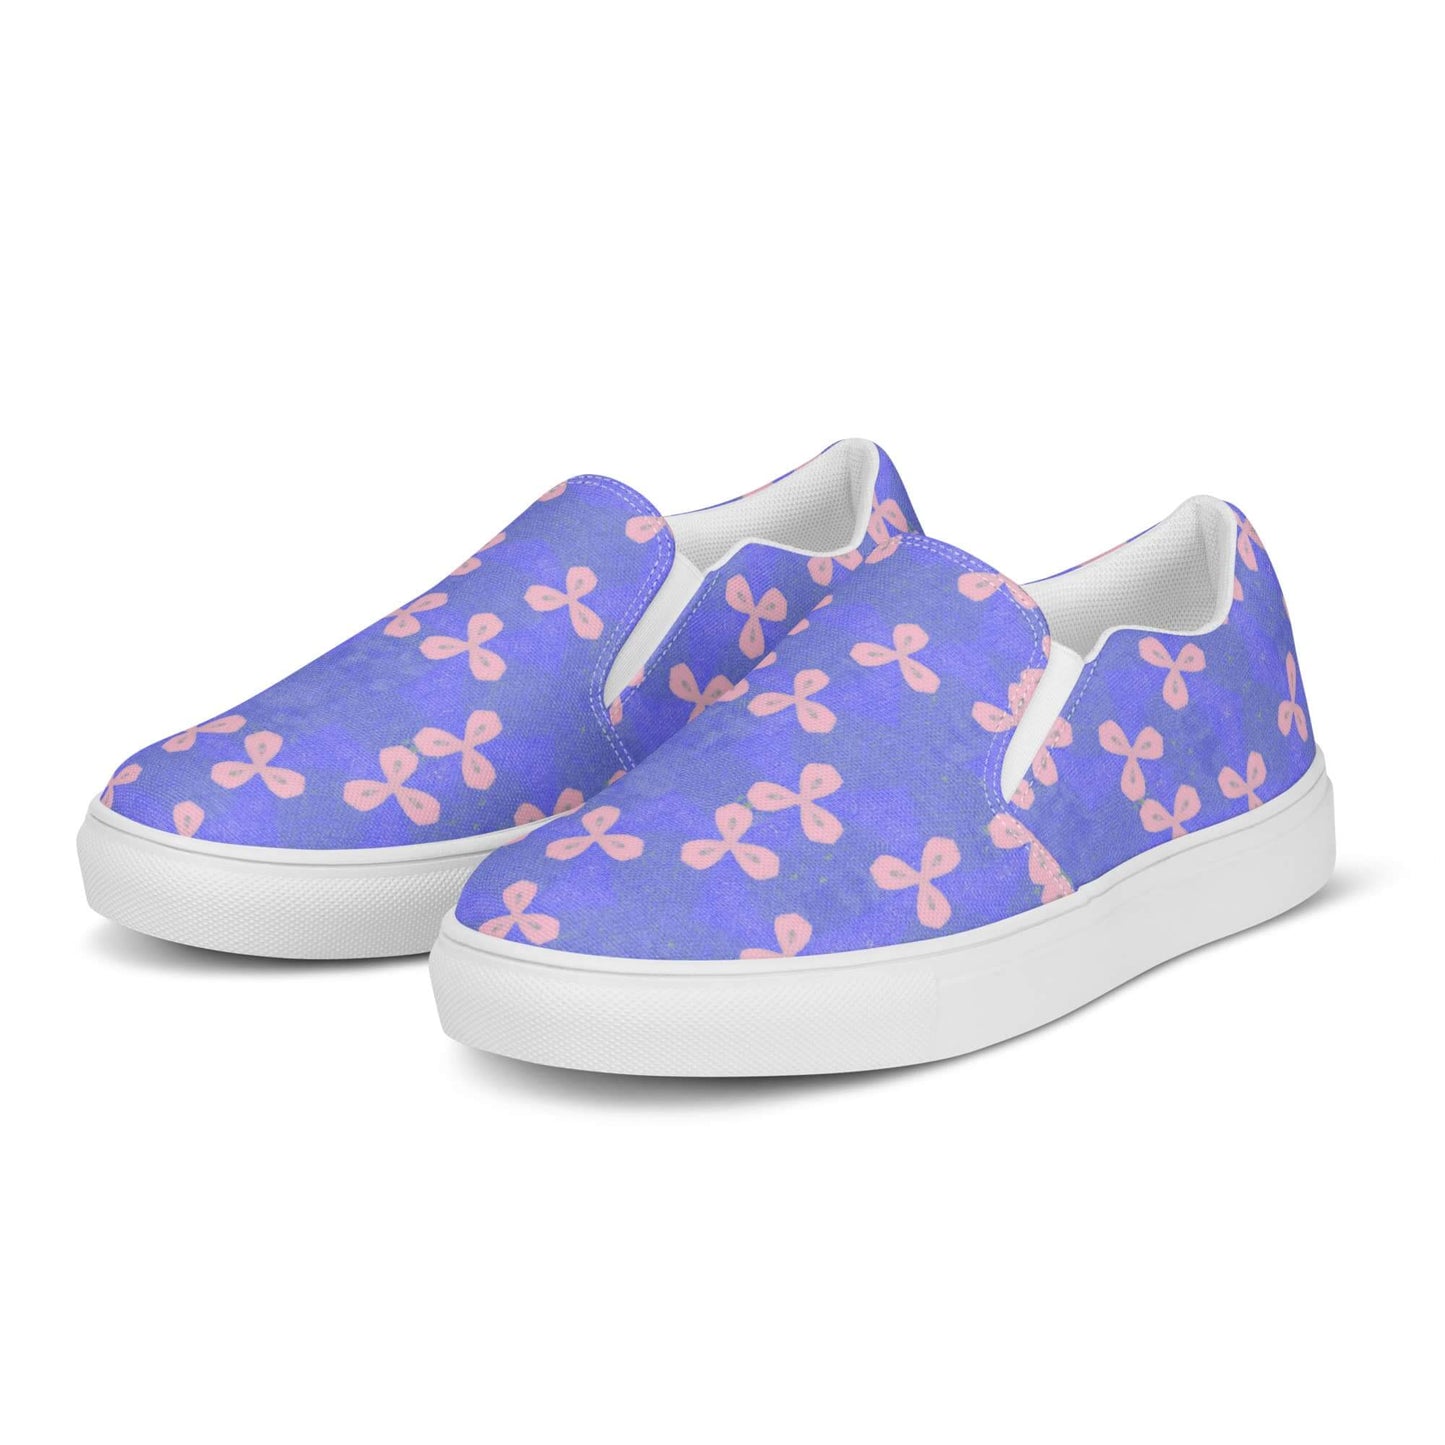 1owlartist-com-women-s-floral-slip-on-canvas-shoes